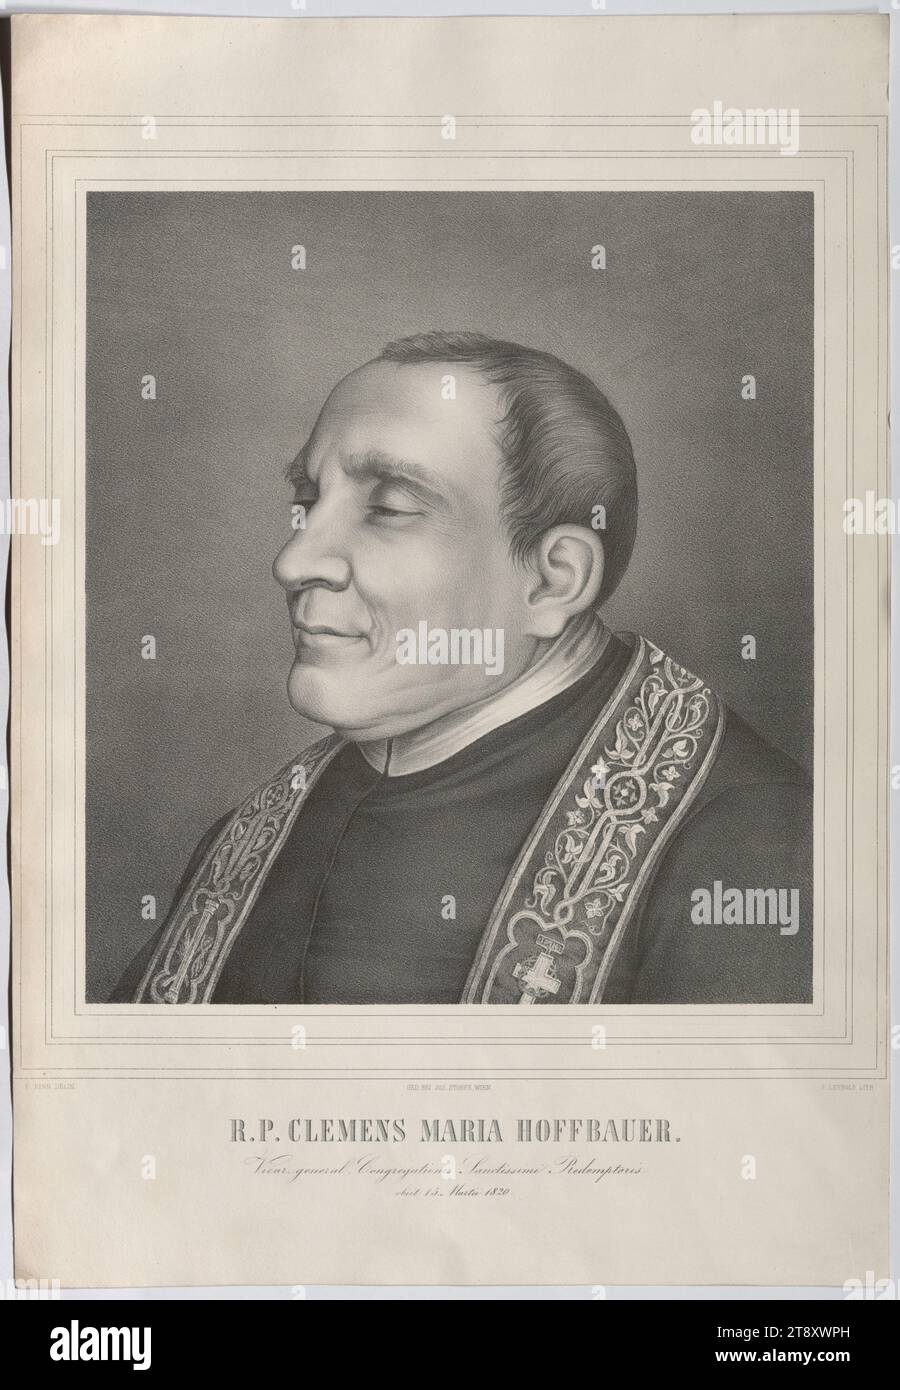 R. P. CLEMENS MARIA HOFFBAUER (sic!). Vicar. general. Congregationis Sanctissimi Redemptoris. obiit 15. Martii 1820.', Eduard Friedrich Leybold (1798-1879), lithographer, Joseph Stoufs, Printer, Date around 1850, paper, lithography, height 50, 2 cm, width 34, 7 cm, Inscription, 'P. RINN DELIN.', 'GED. BEI JOS. STOUFS, VIENNA.', 'F. LEYBOLD LITH.', Fine Arts, Religion, Estate Constantin von Wurzbach, portrait, man, priest (Roman Catholic), The Vienna Collection Stock Photo